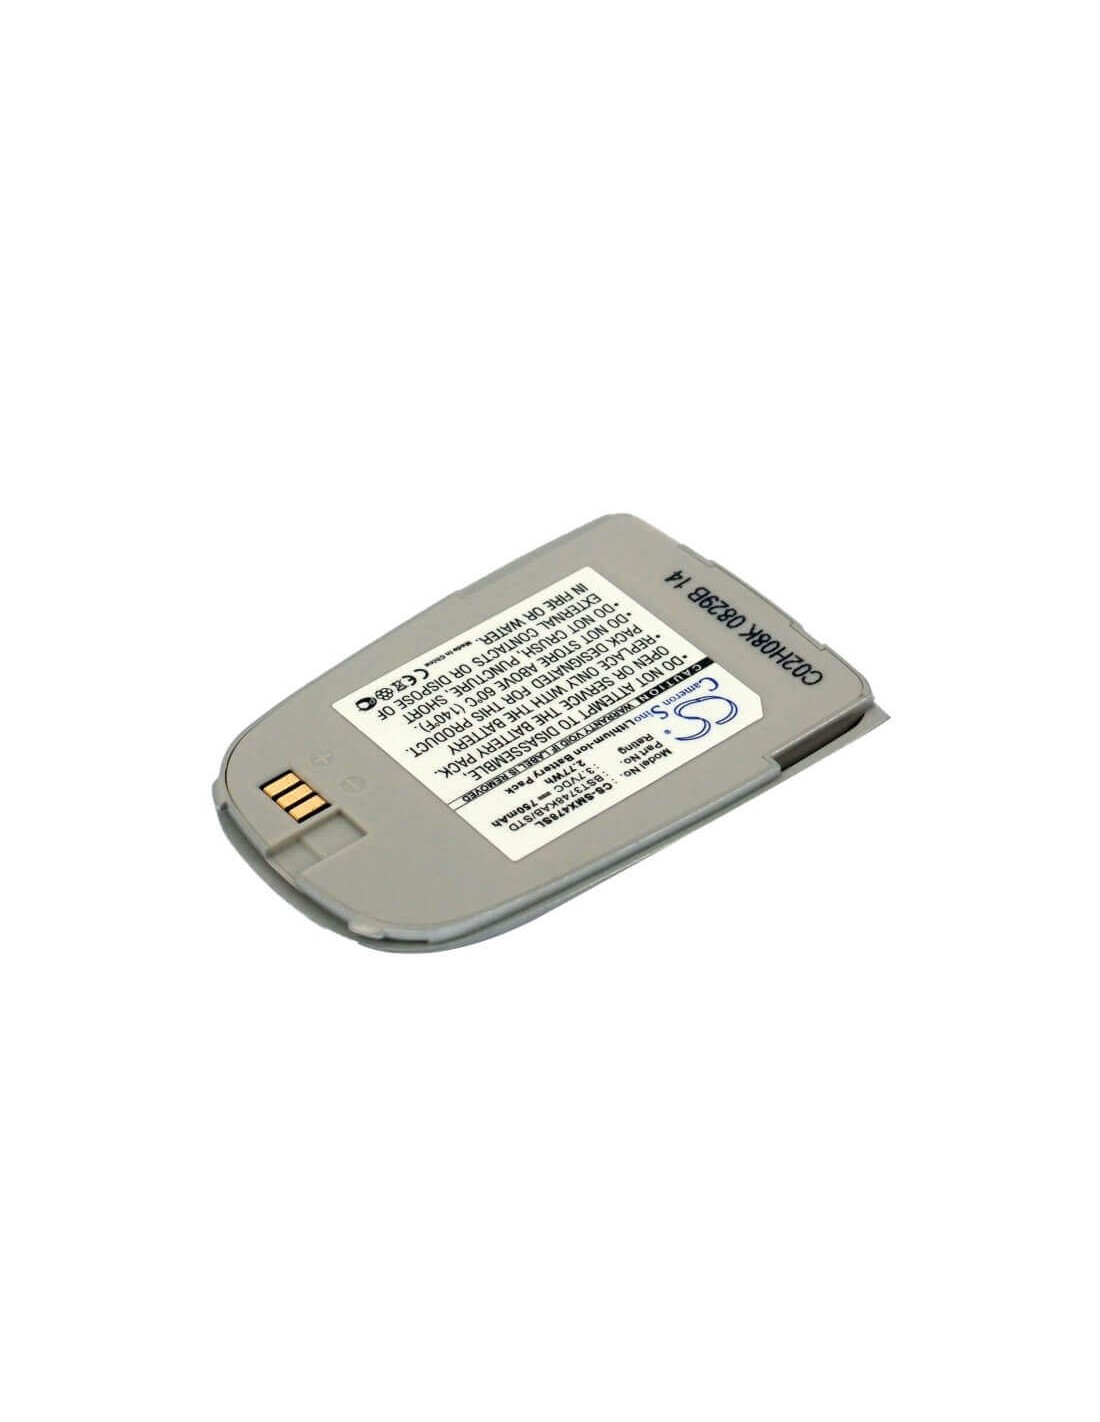 Battery for Samsung X478, SPH-X475, X470 3.7V, 750mAh - 2.78Wh